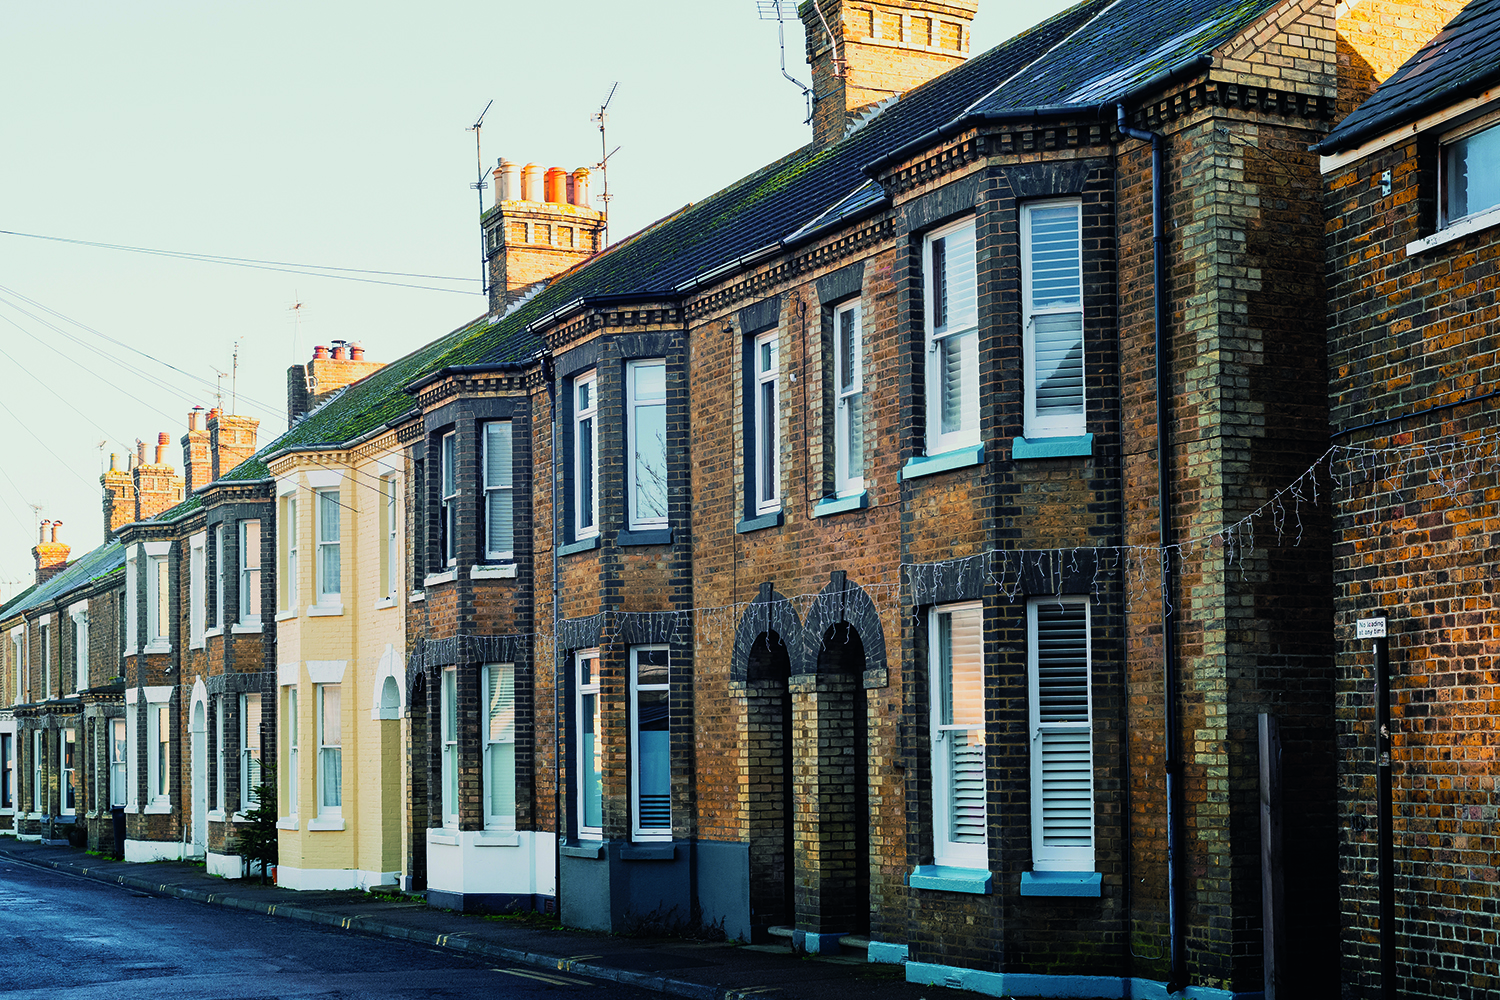 A street of semi-detached brick houses